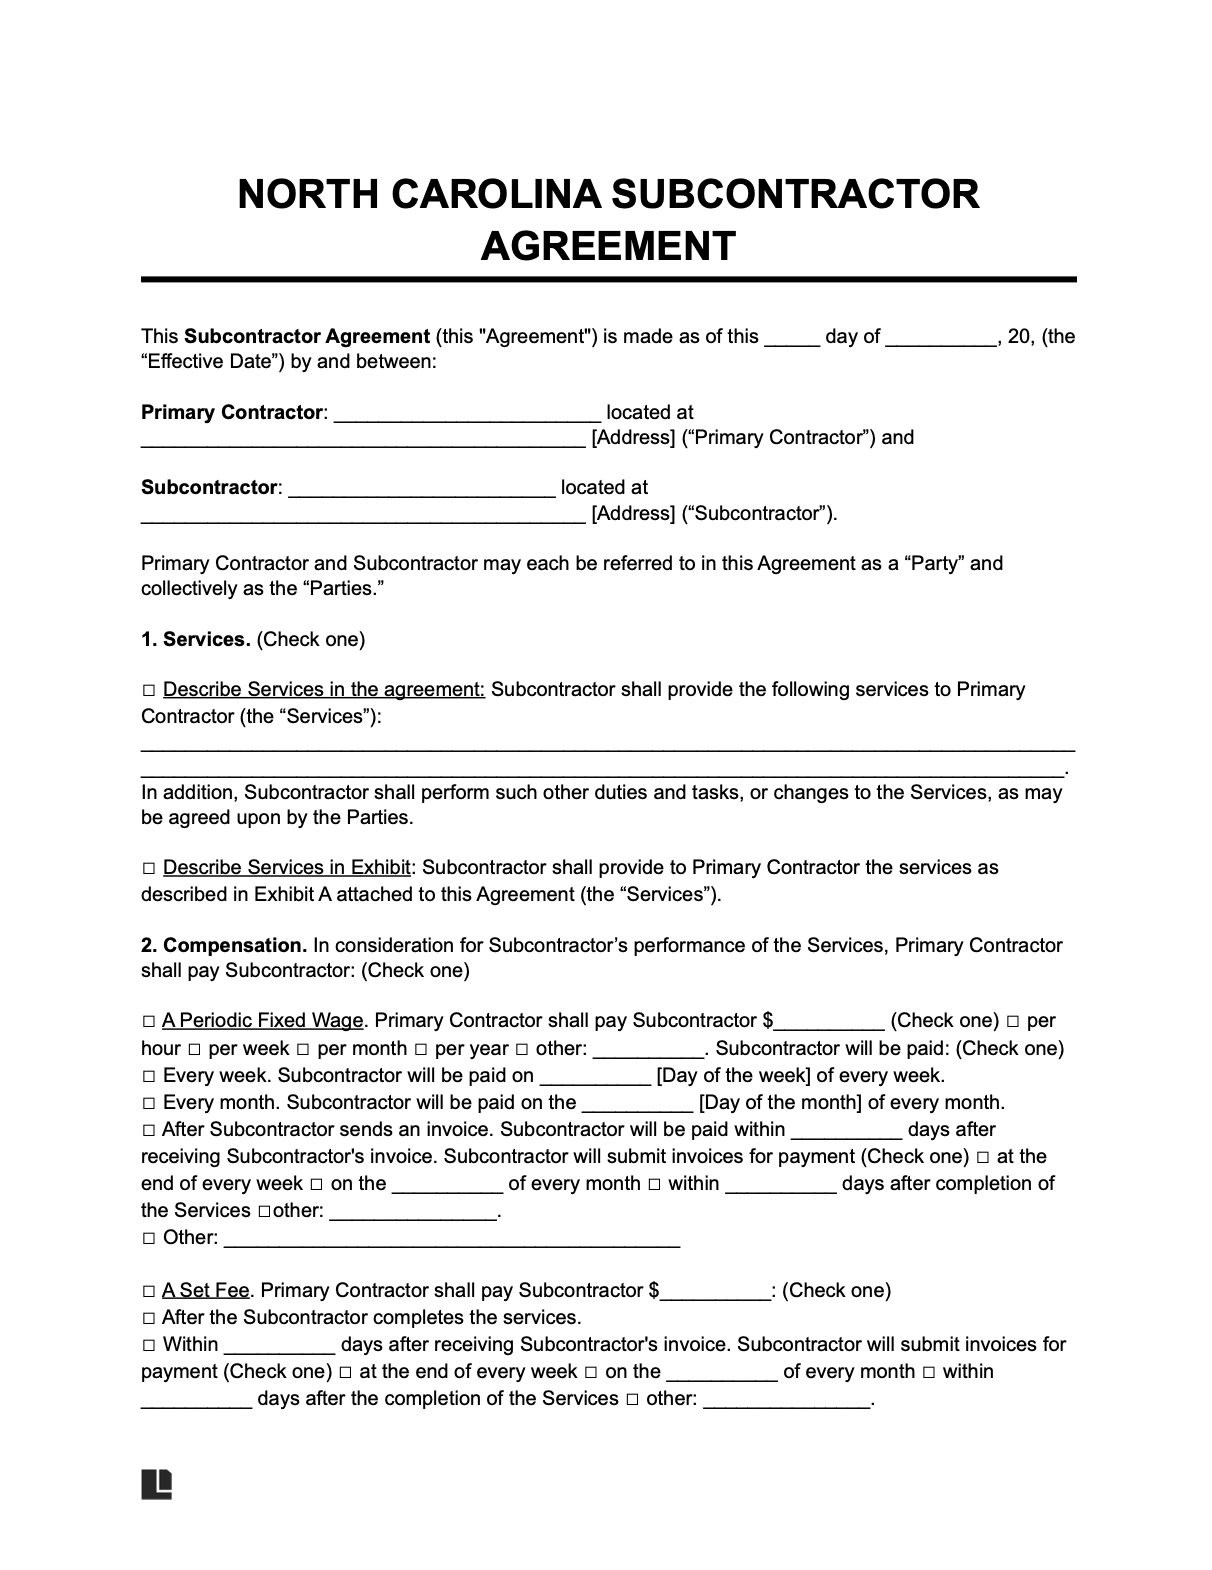 north carolina subcontractor agreement